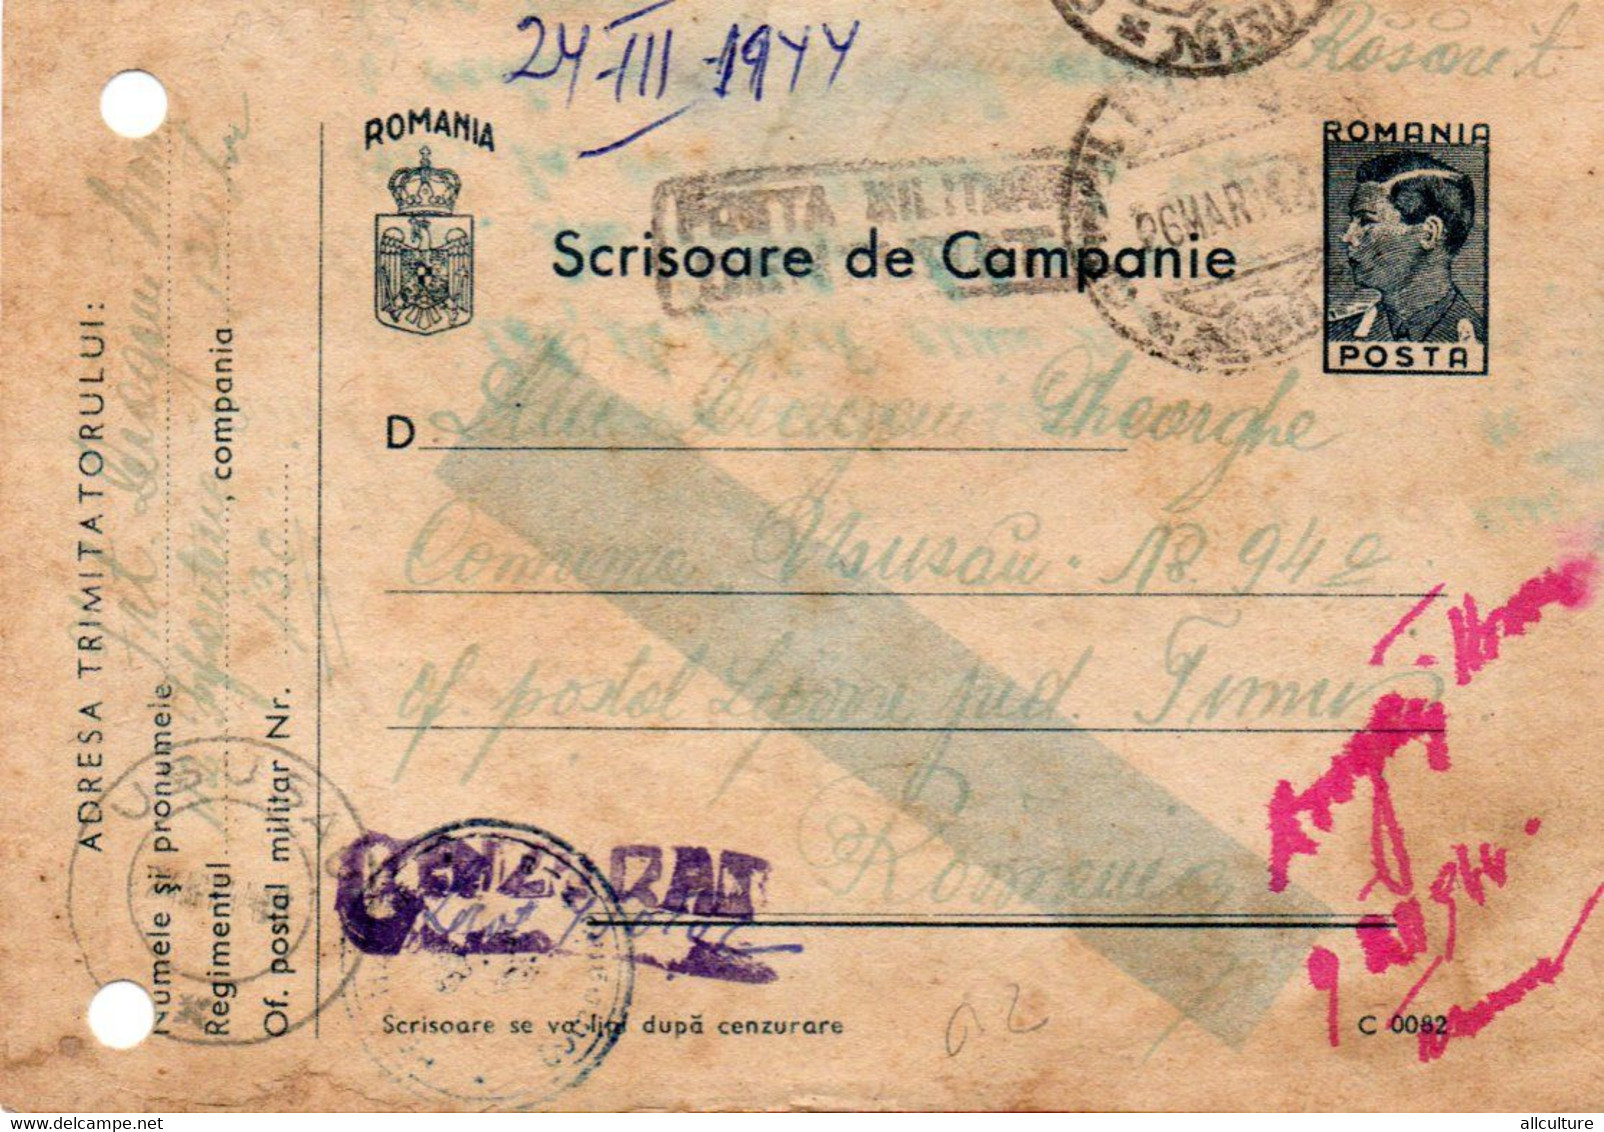 A52,A53 - 2 SCRISOARI DE CAMPANIE 2 LETTERS-SHEET IN BLUE ILUSTRATED  24.03. 1944,4 MAI 1944 WW2 STATIONERY ROMANIA USED